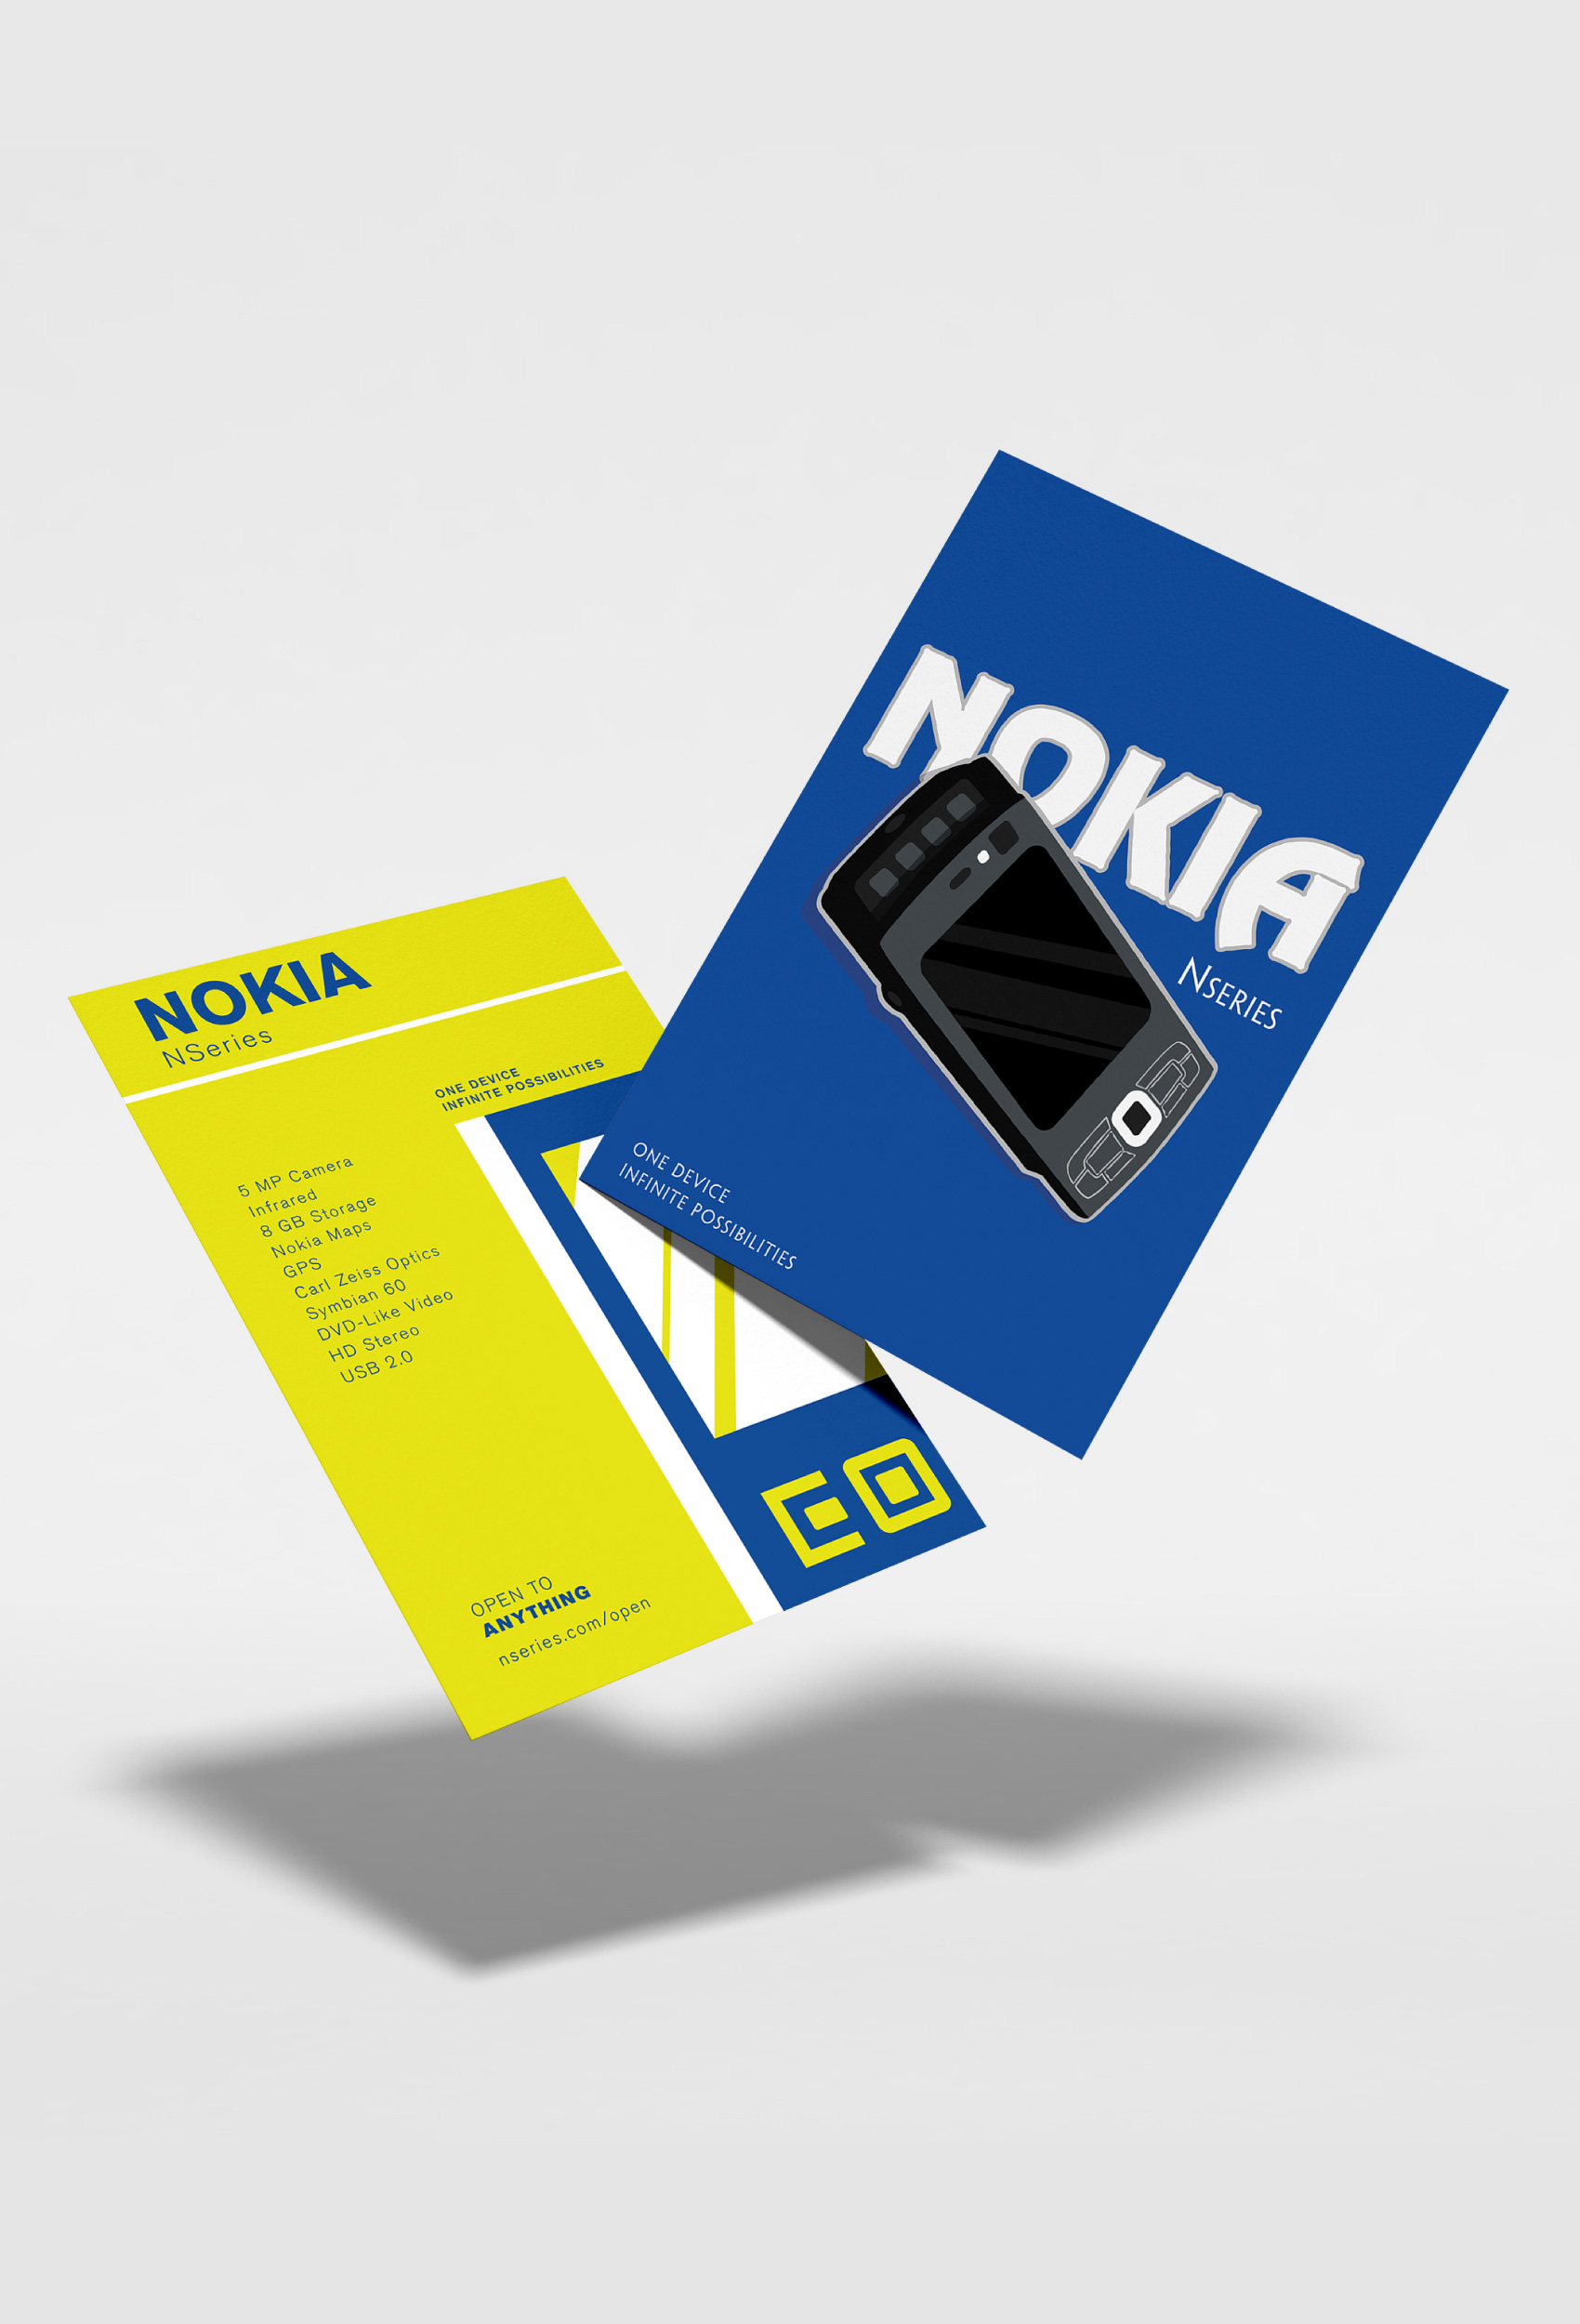 An image of Nokia's swiss style & plakatstil poster designs